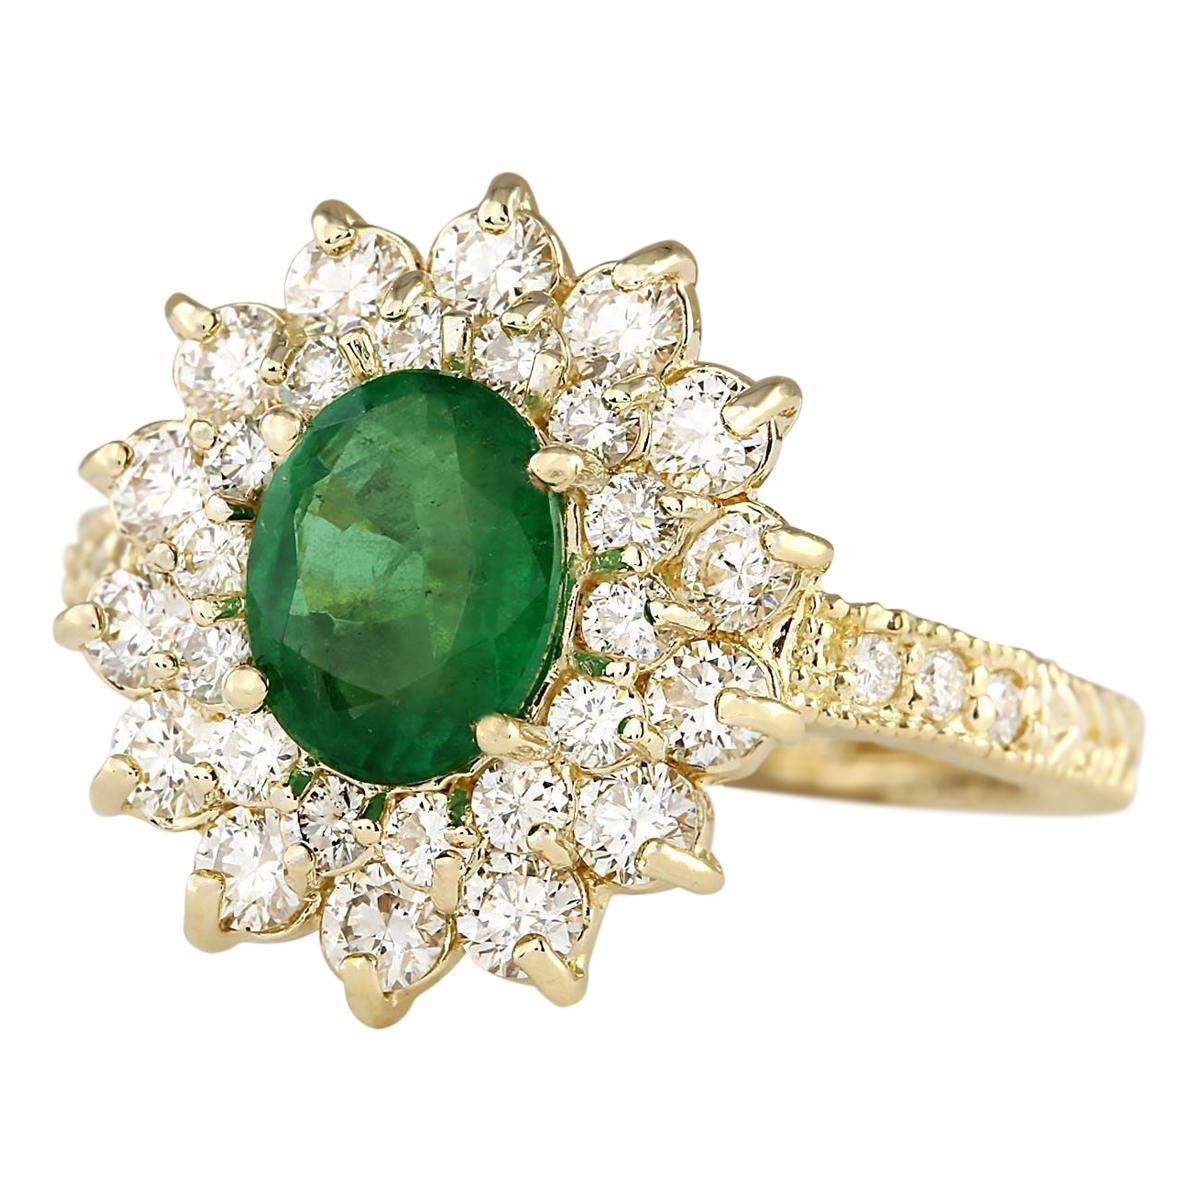 2.66 Carat Natural Emerald 14 Karat Yellow Gold Diamond Ring
Stamped: 14K Yellow Gold
Total Ring Weight: 5.3 Grams
Total Natural Emerald Weight is 1.38 Carat (Measures: 8.00x6.00 mm)
Color: Green
Total Natural Diamond Weight is 1.28 Carat
Color: